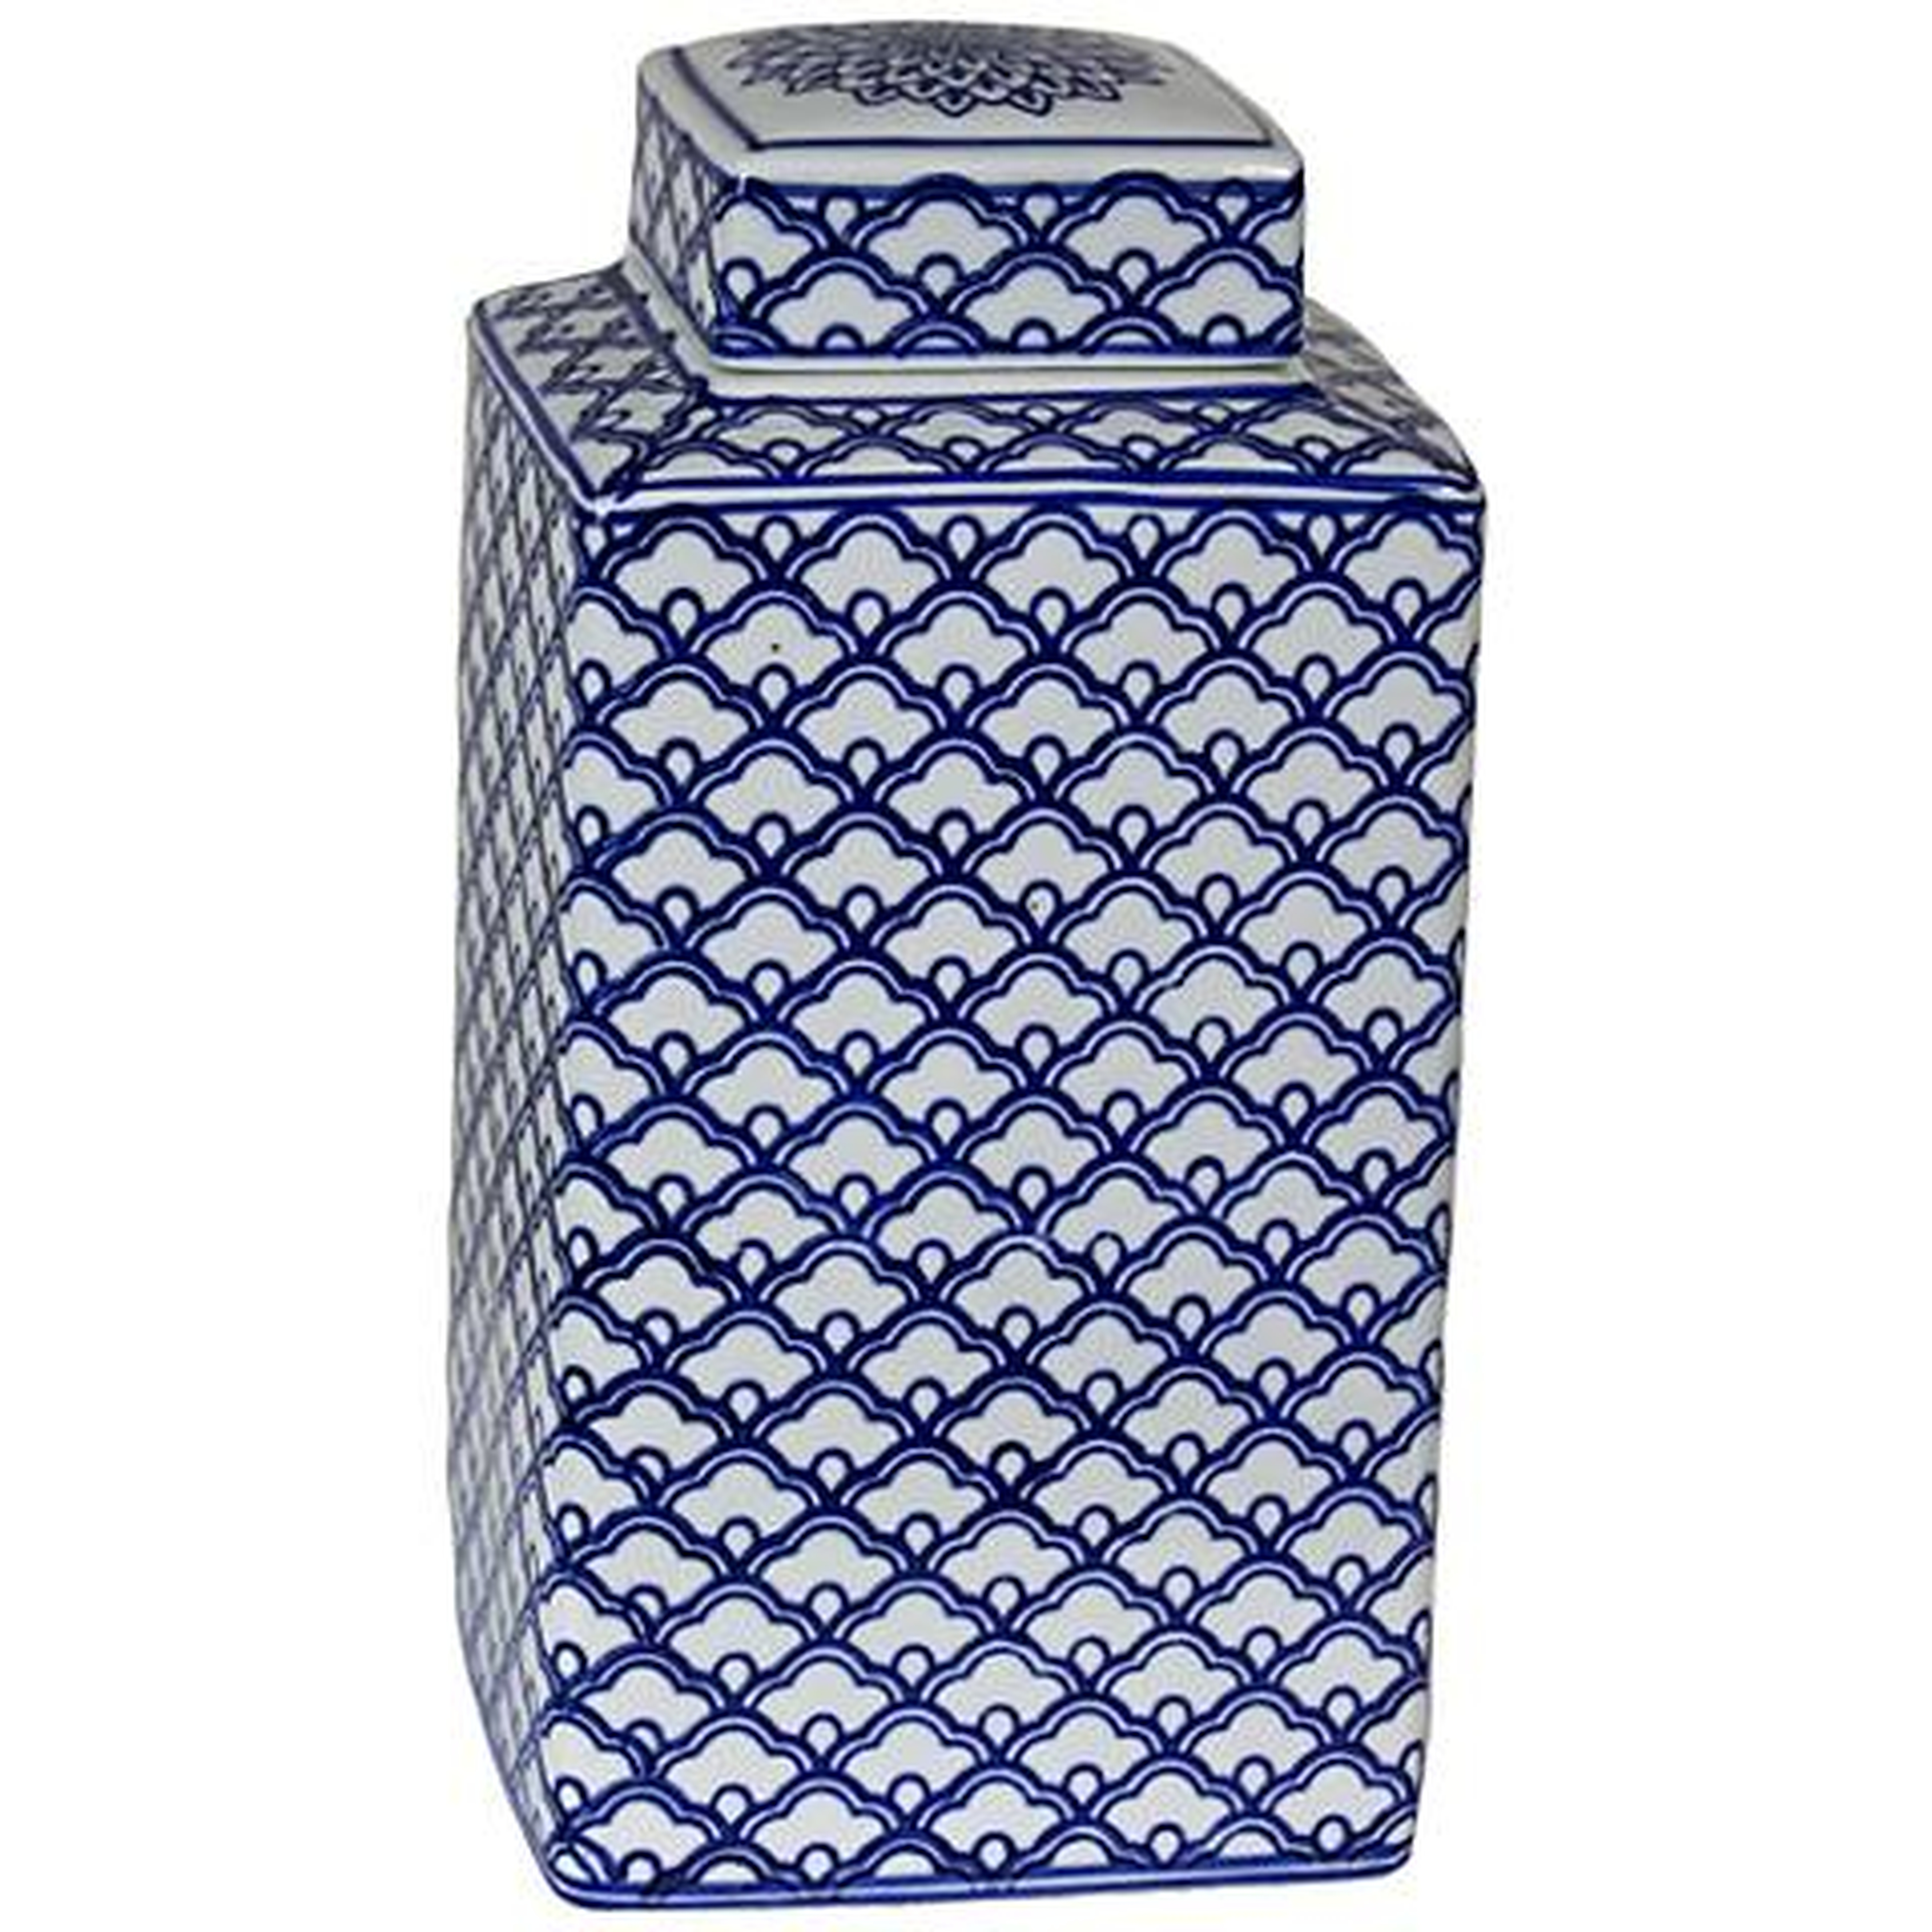 Lee Blue and White 10 1/4" High Ceramic Ginger Jar Vase - Lamps Plus